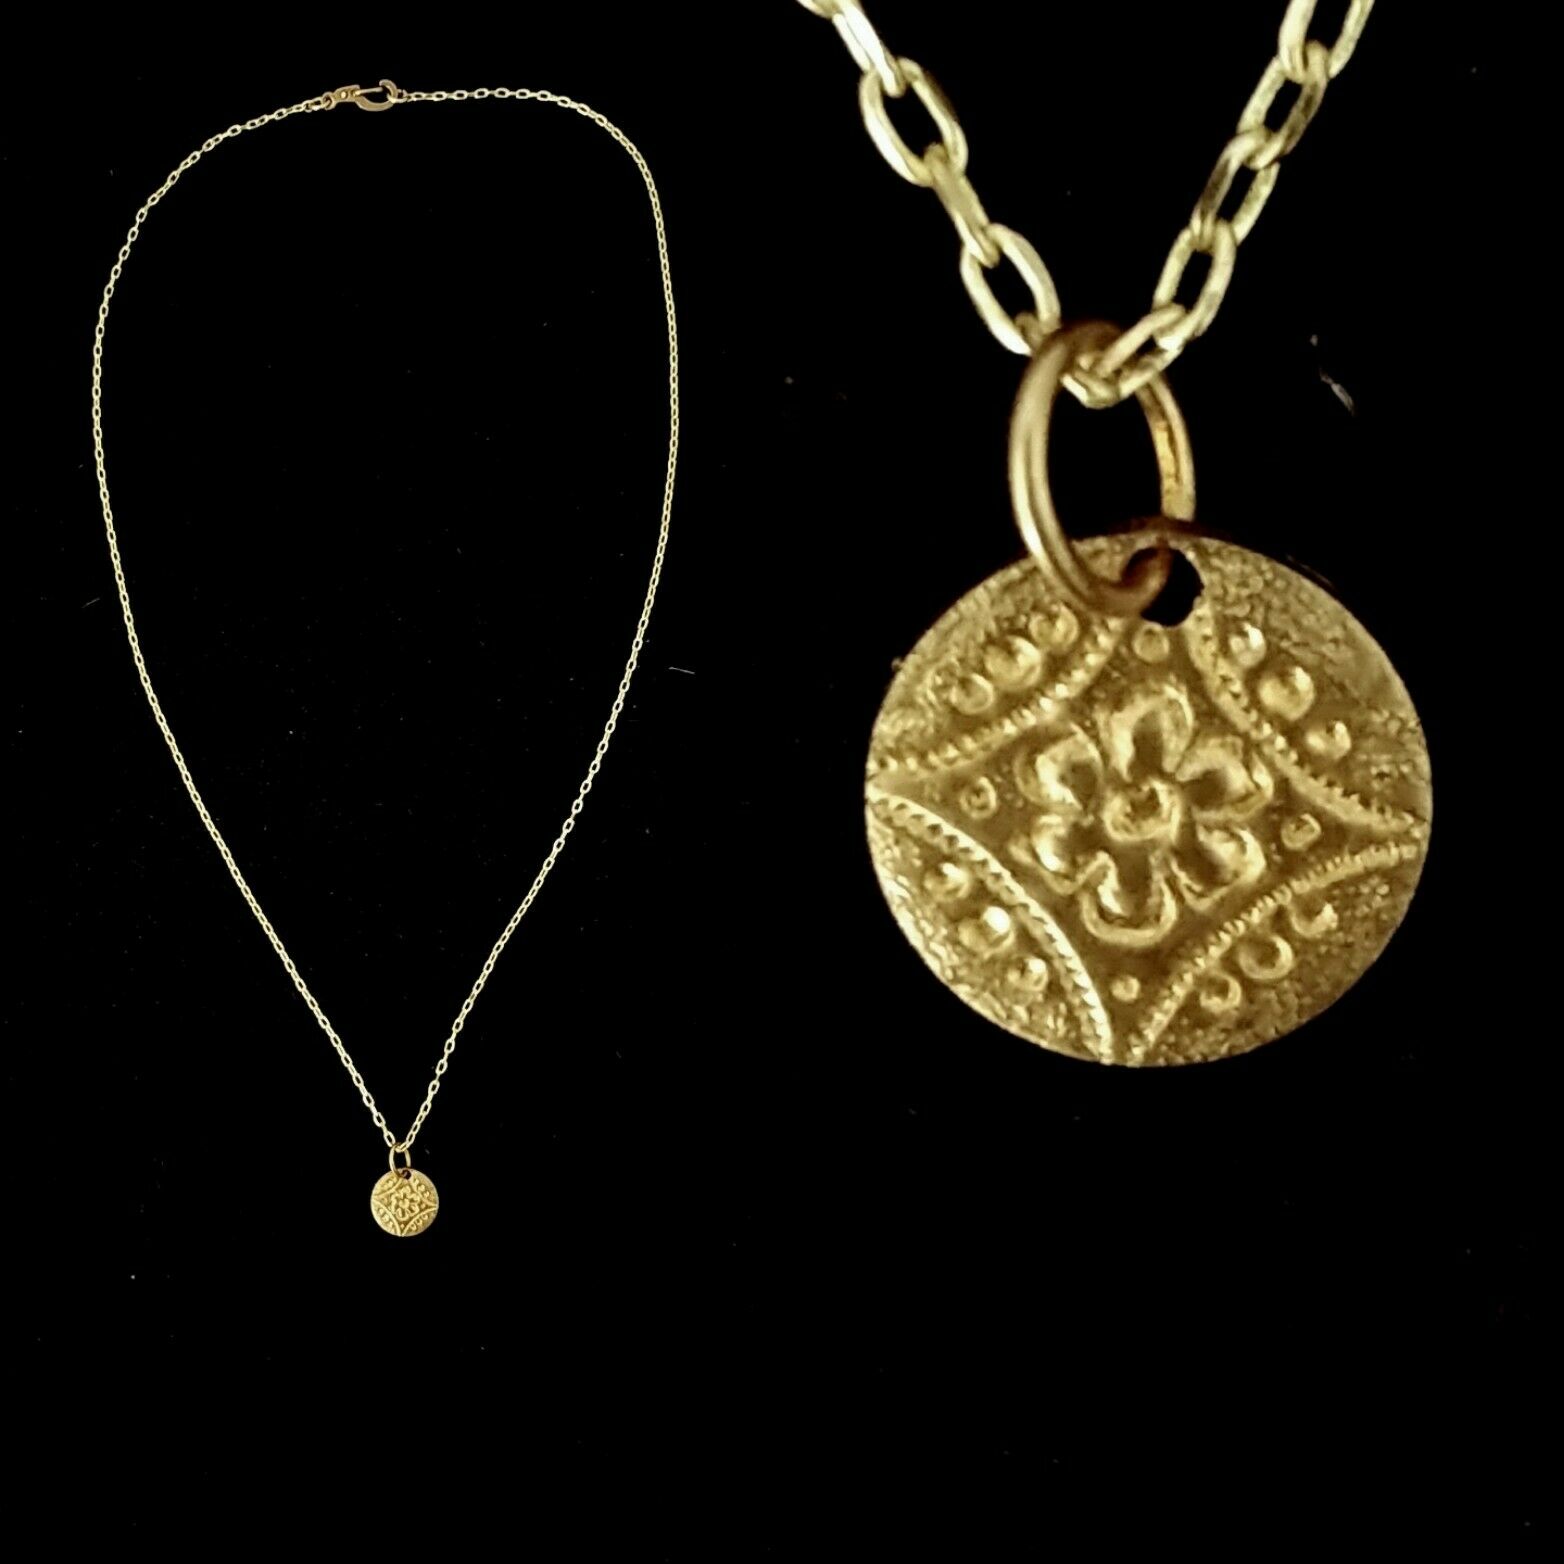 Vintage 1930s Flower Dainty Drop Necklace Gift Idea